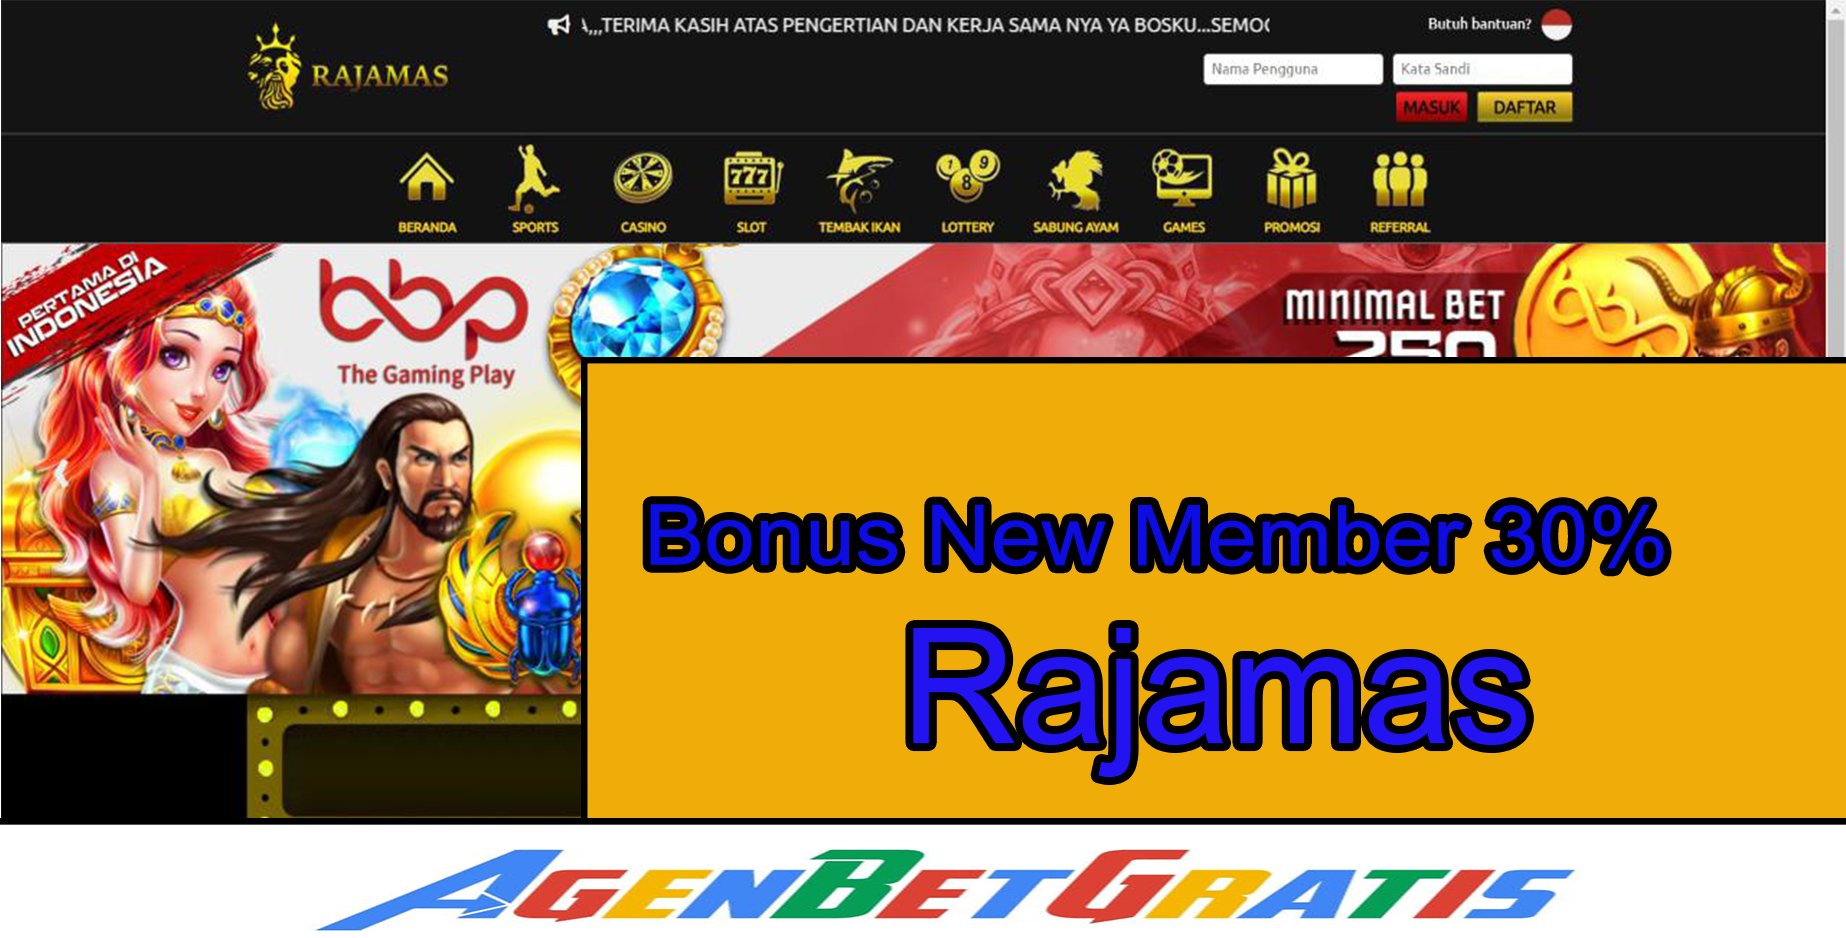 RAJAMAS - Bonus New Member 30%